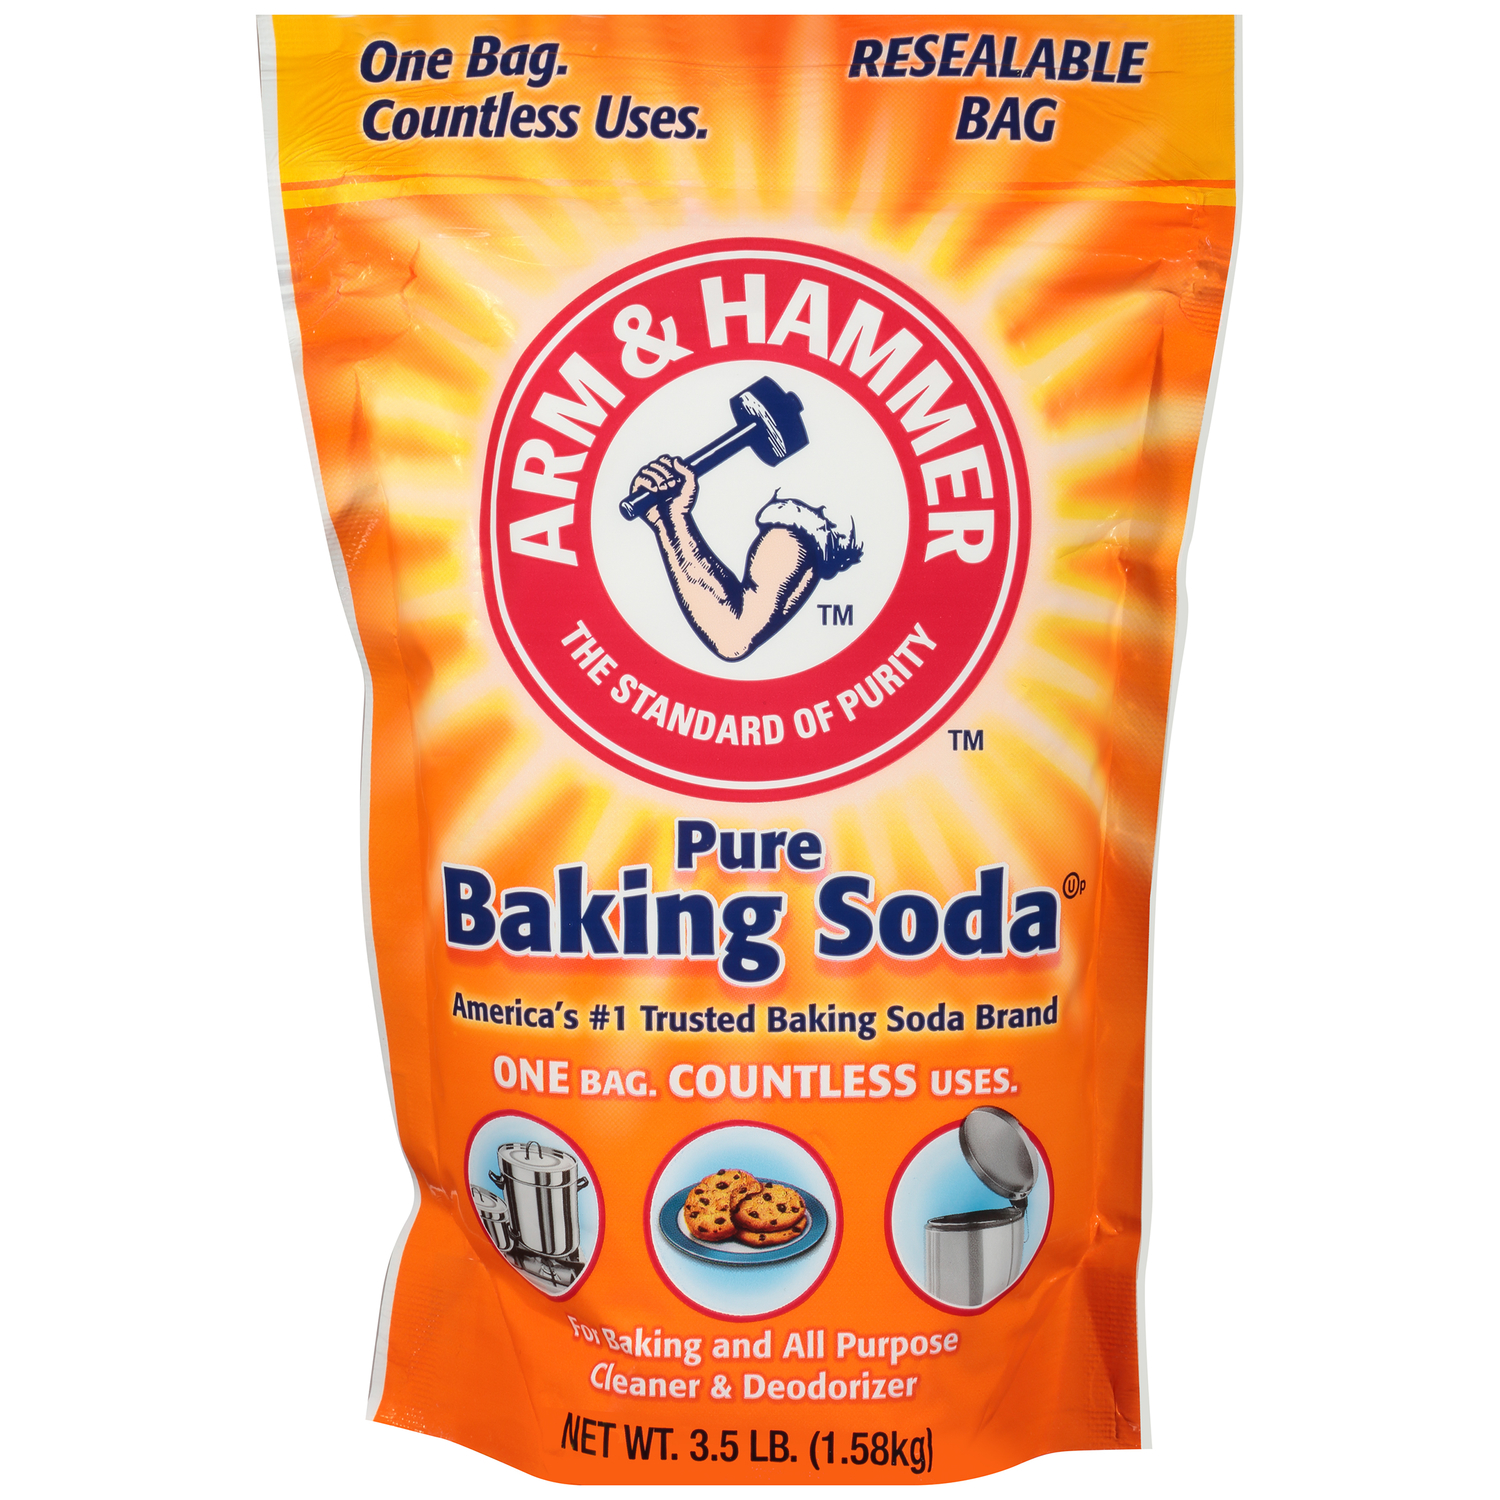 Arm & Hammer Baking Soda Fridge-n-freezer Odor Absorber - 14oz : Target